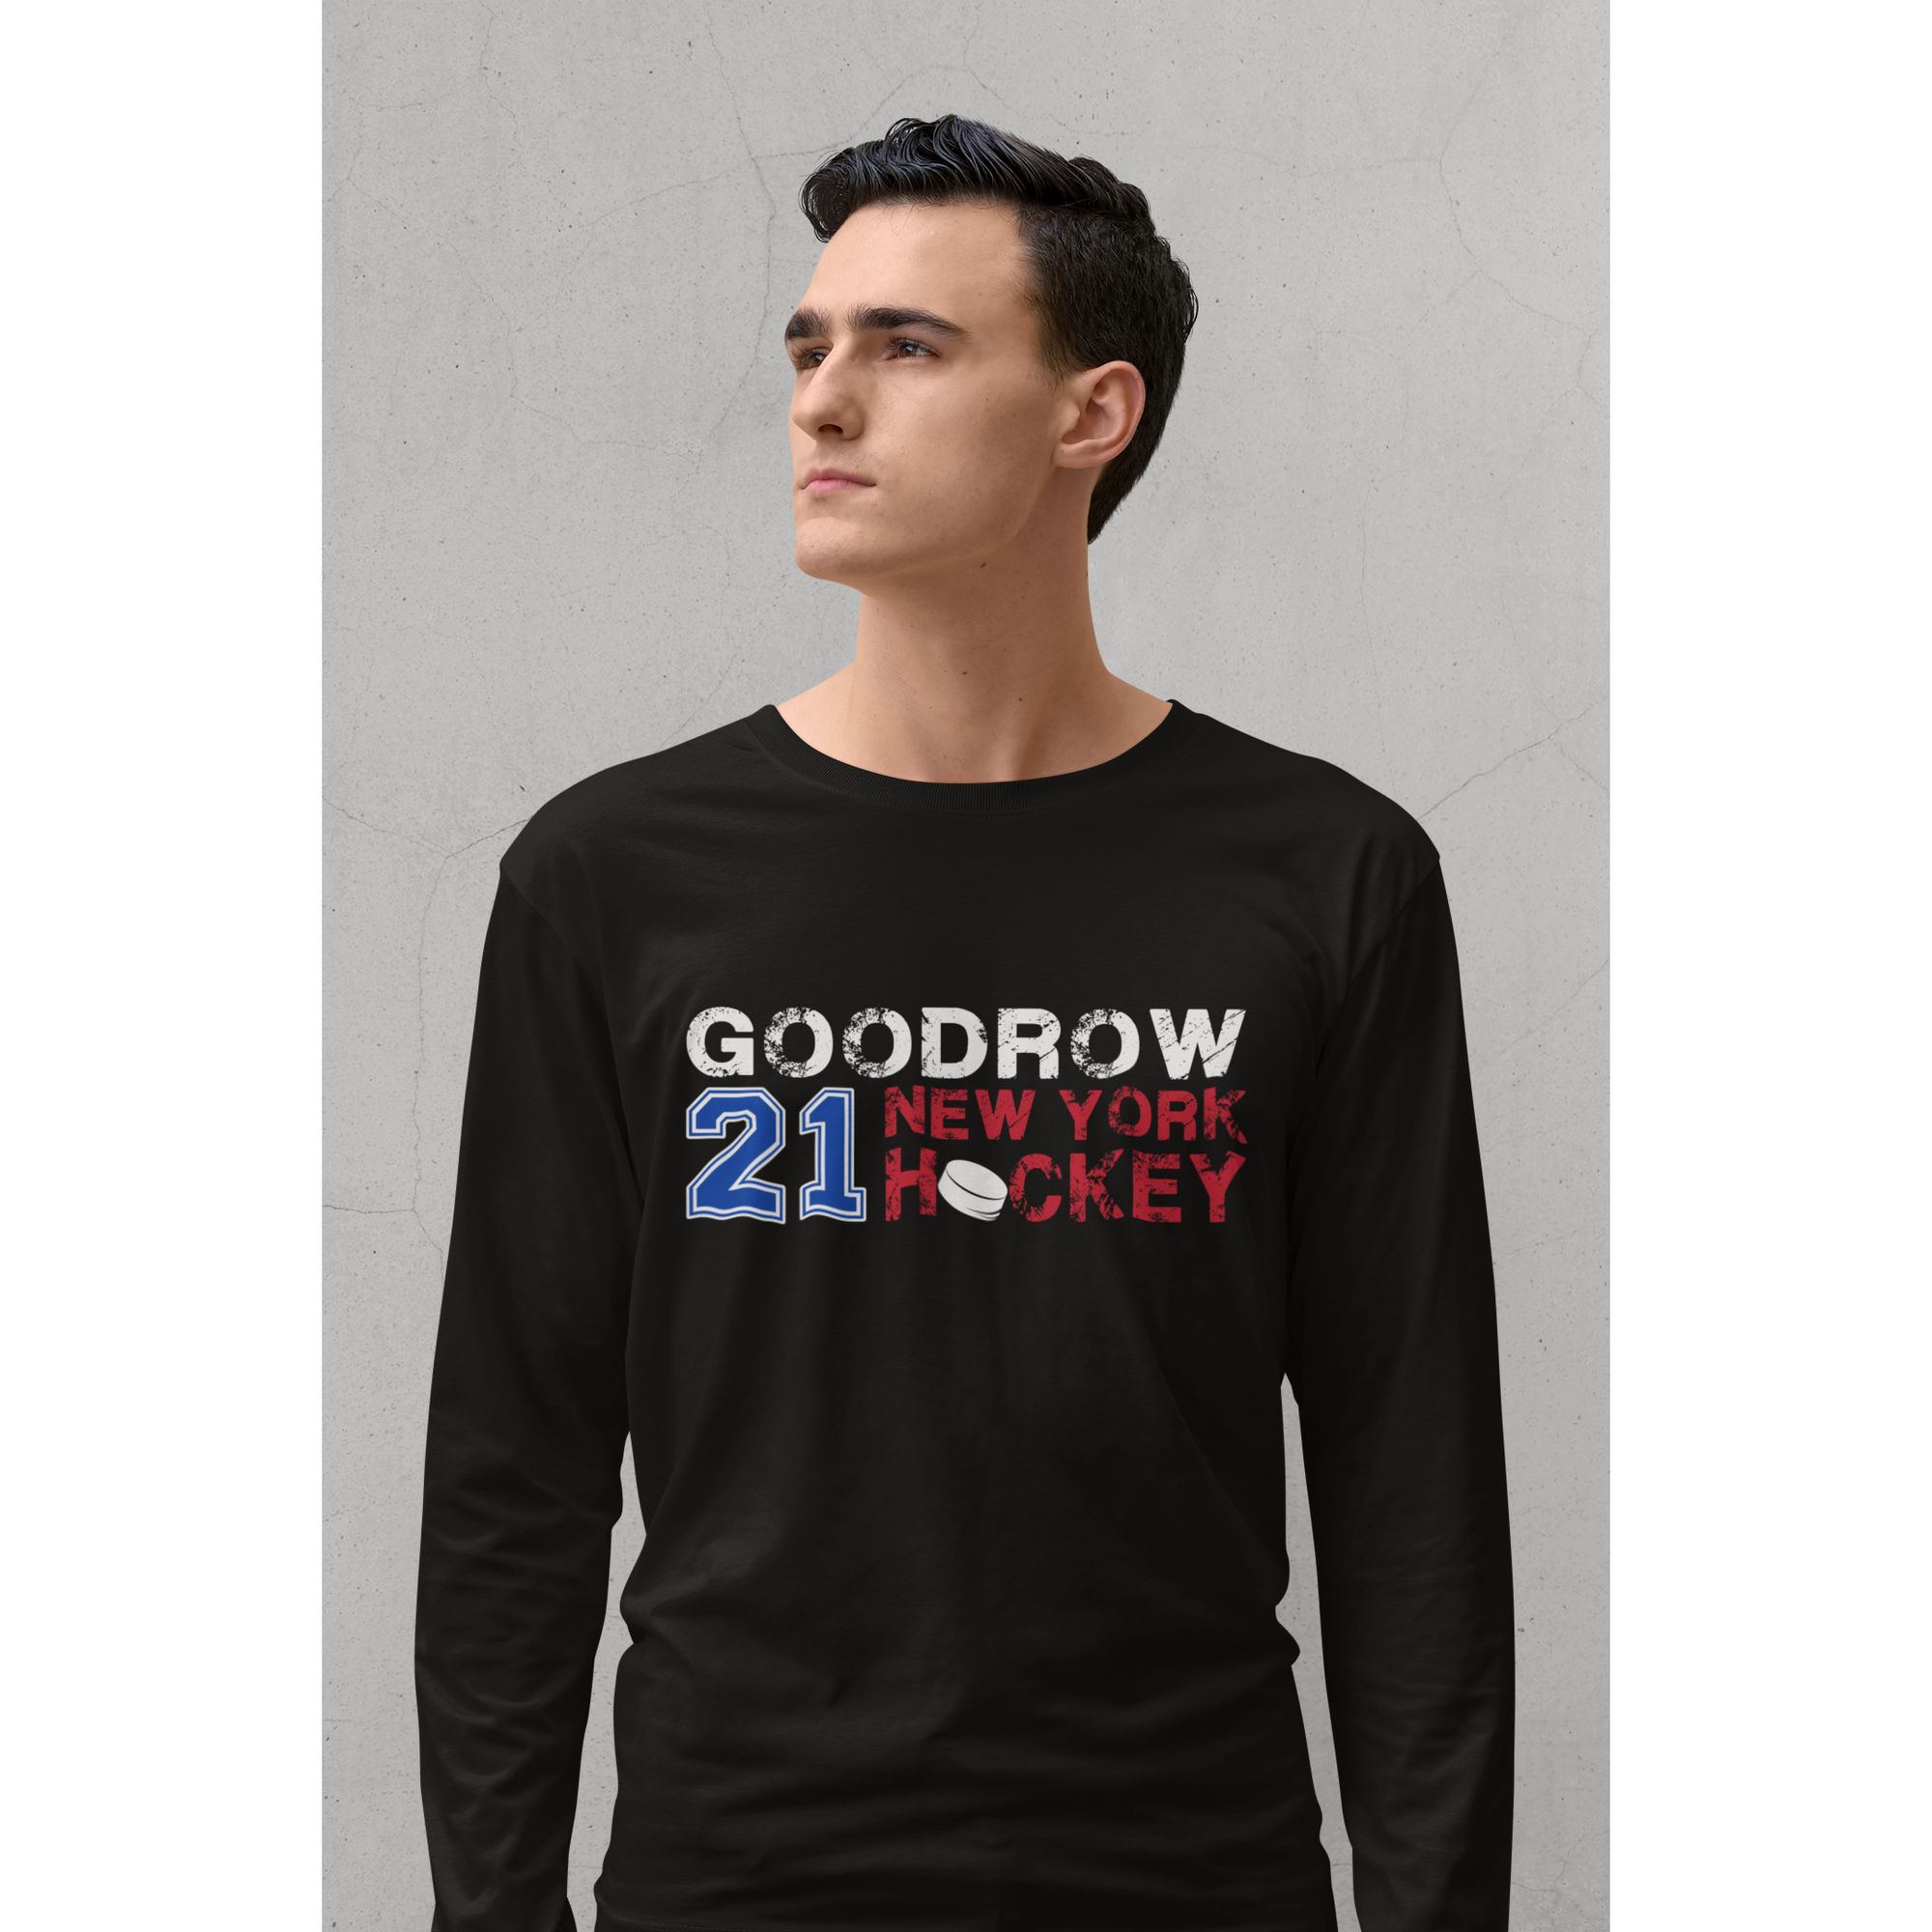 Goodrow 21 New York Hockey Unisex Jersey Long Sleeve Shirt